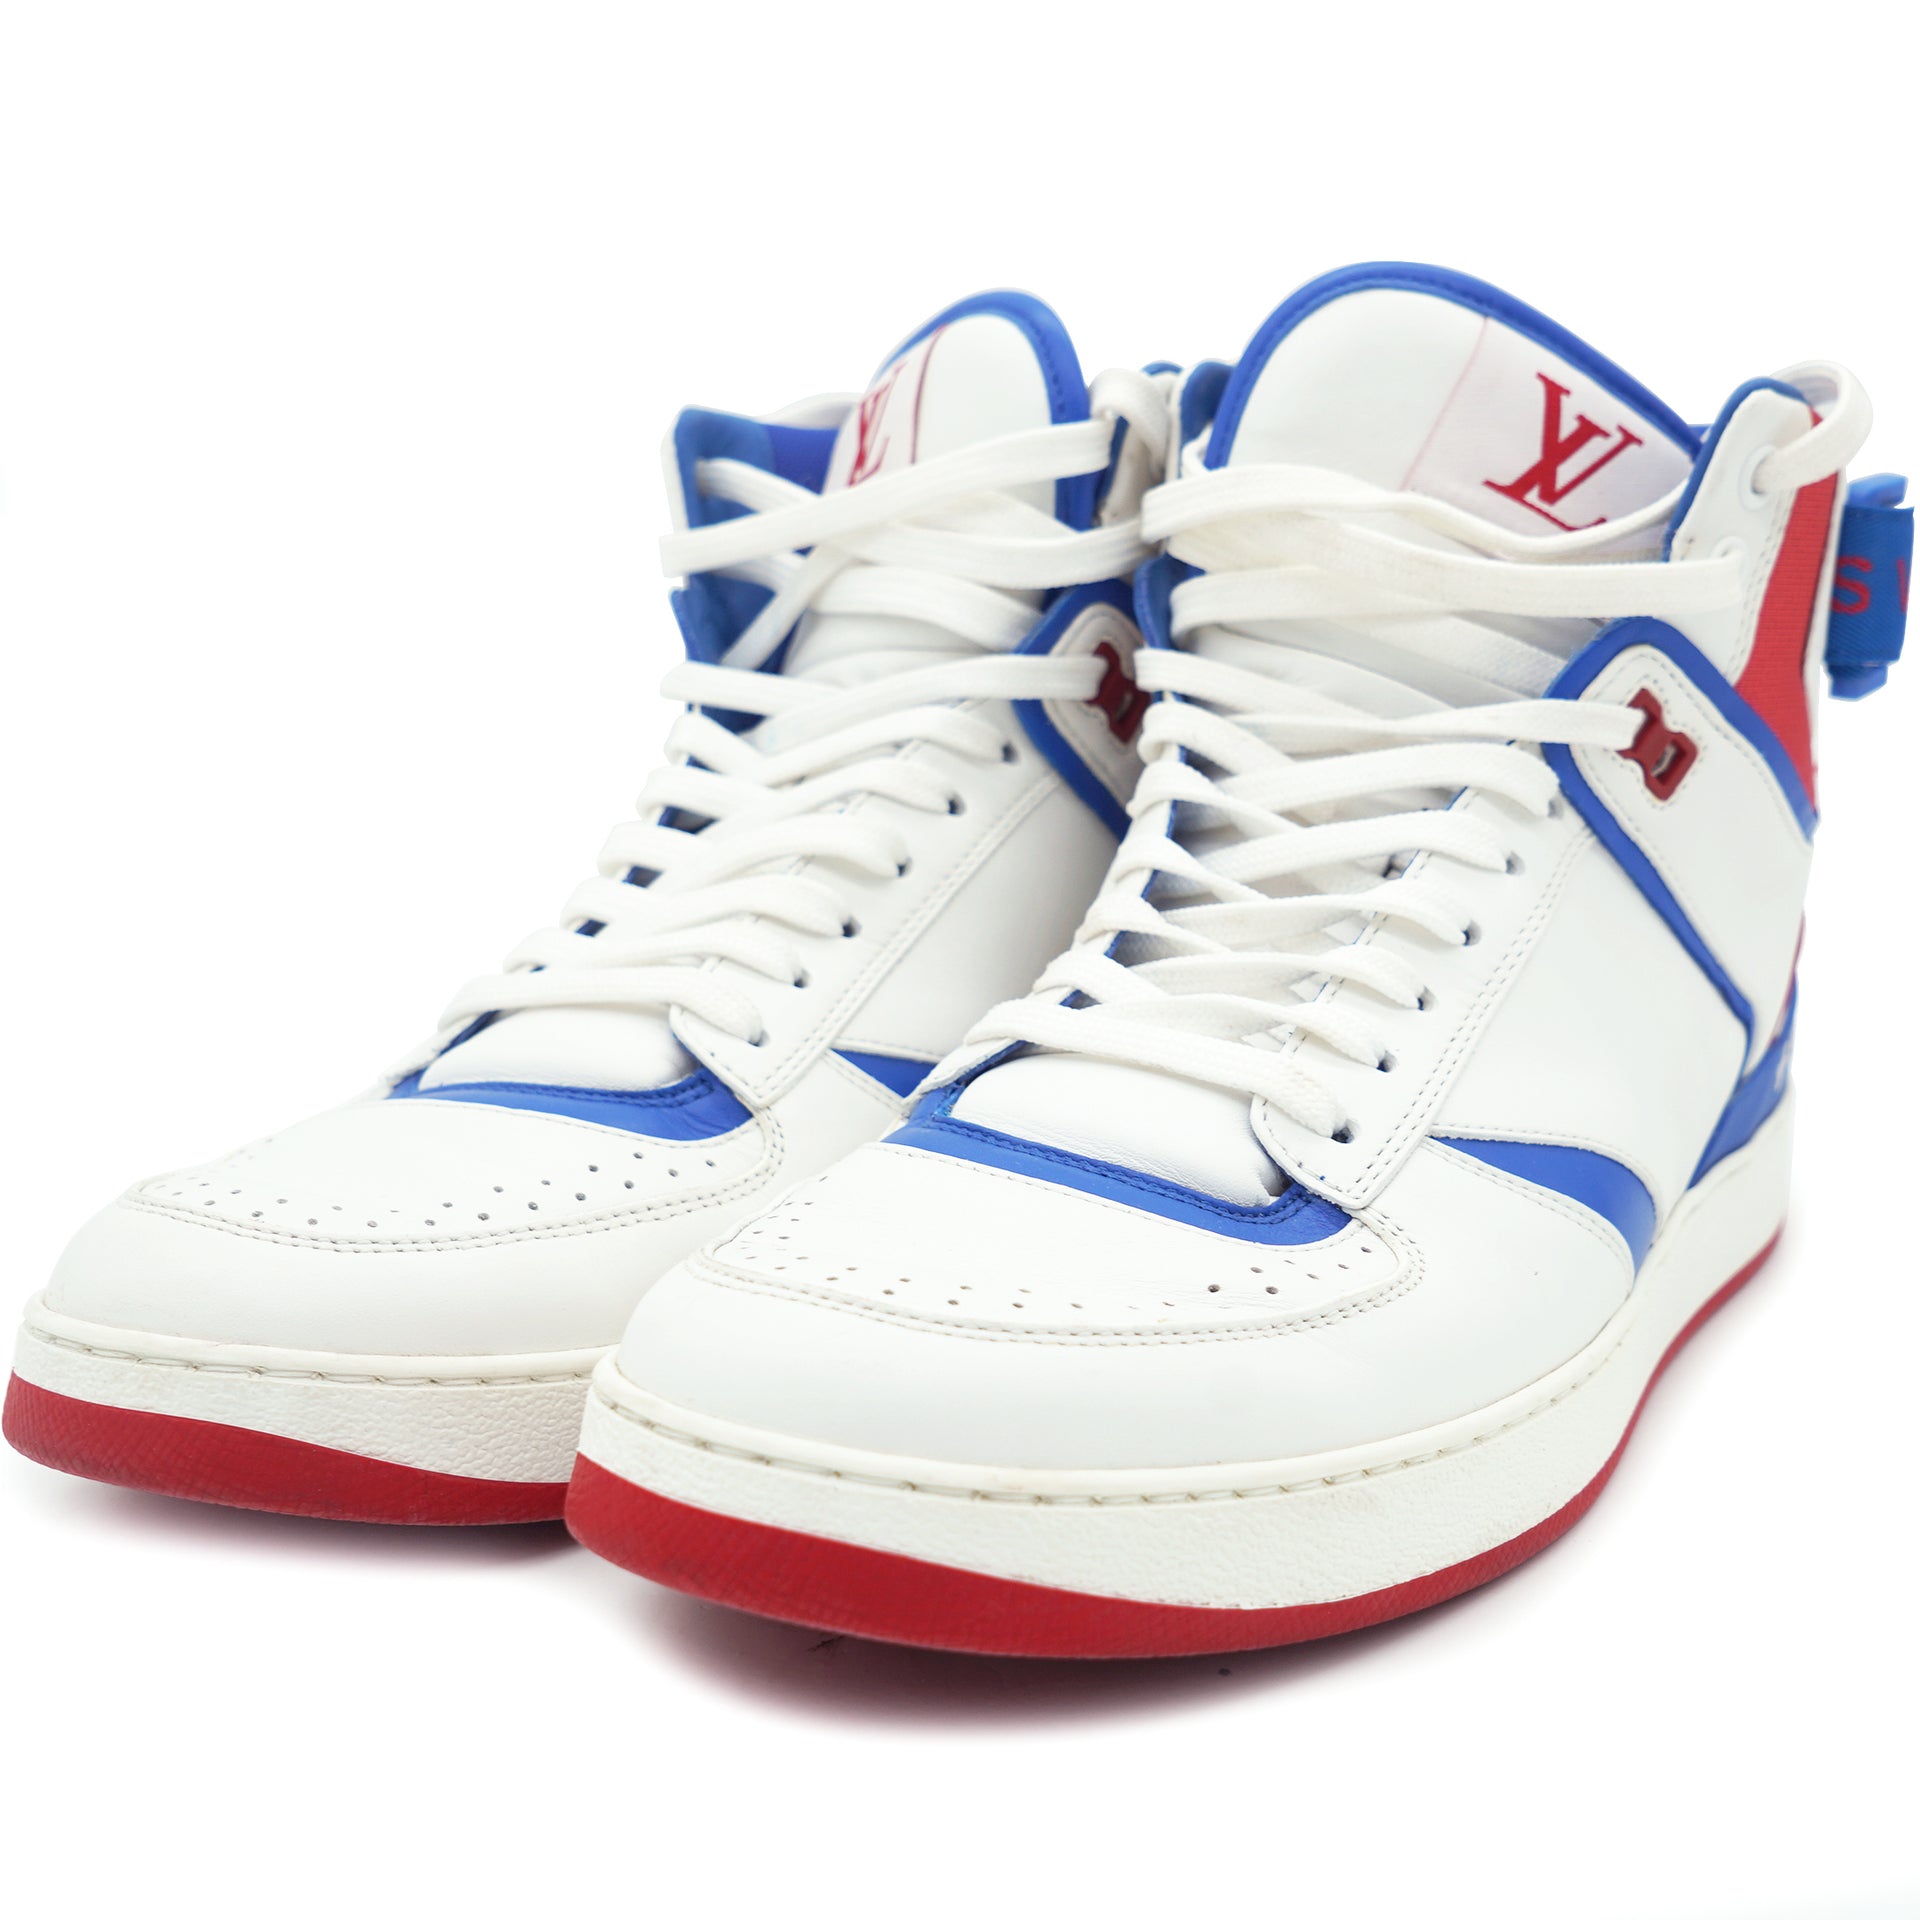 Louis Vuitton, Shoes, New Rare Louis Vuitton Virgil Abloh White Red  Trainer Sneakers W Box Dust Bags